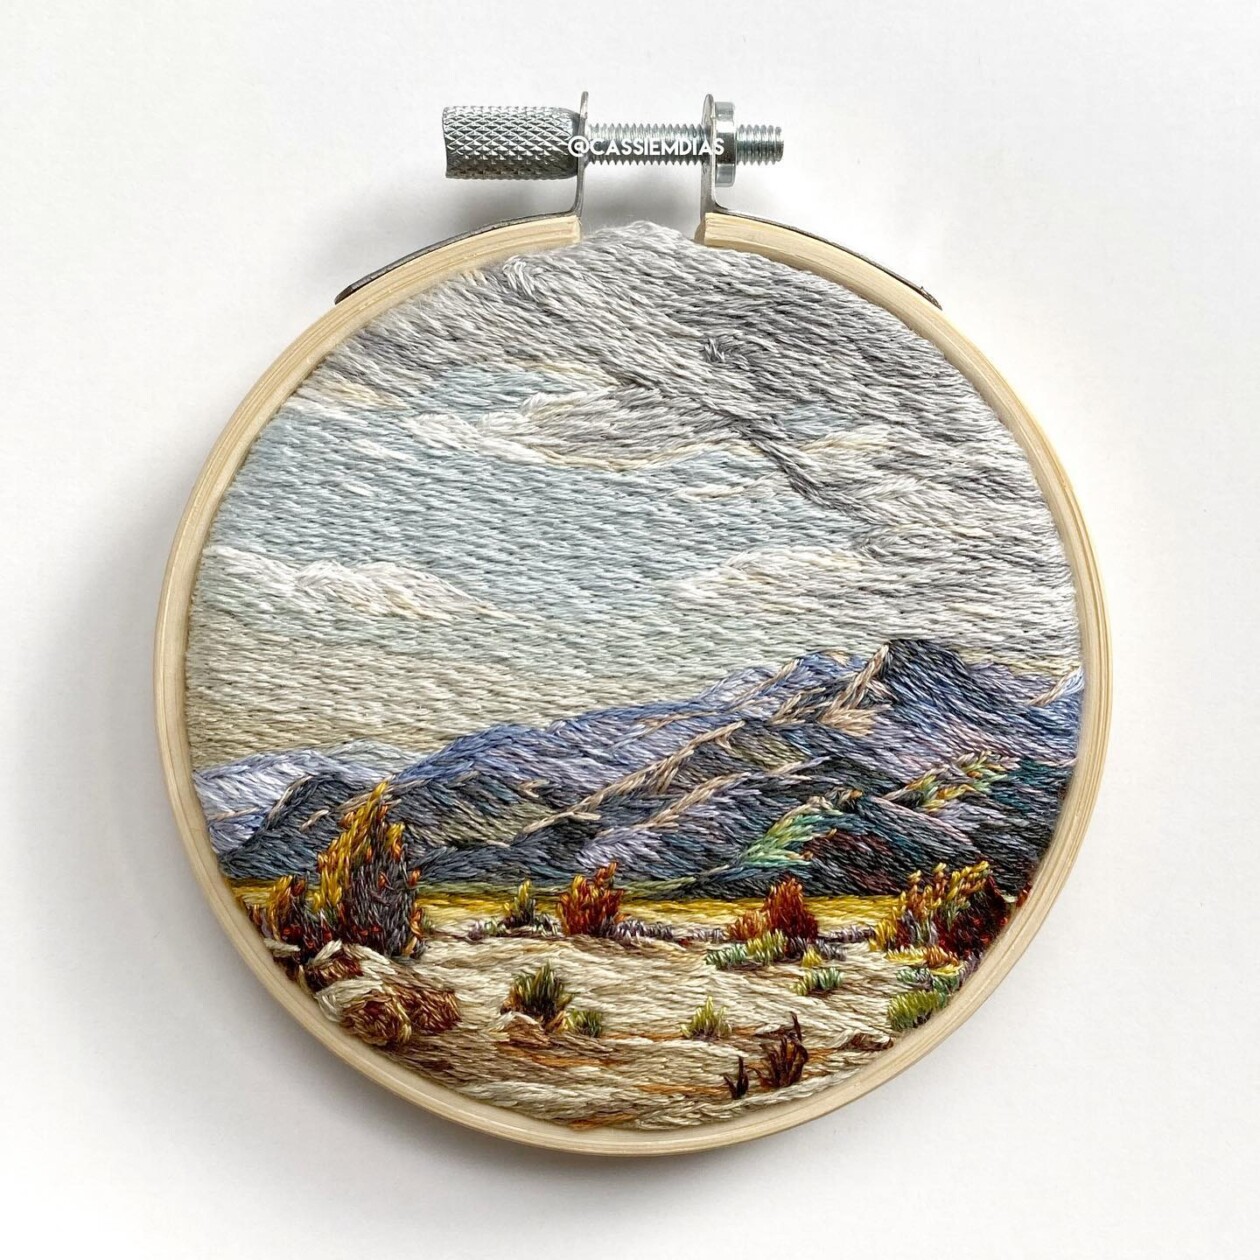 Wonderful Impressionistic Landscape Embroideries By Cassandra Dias (1)